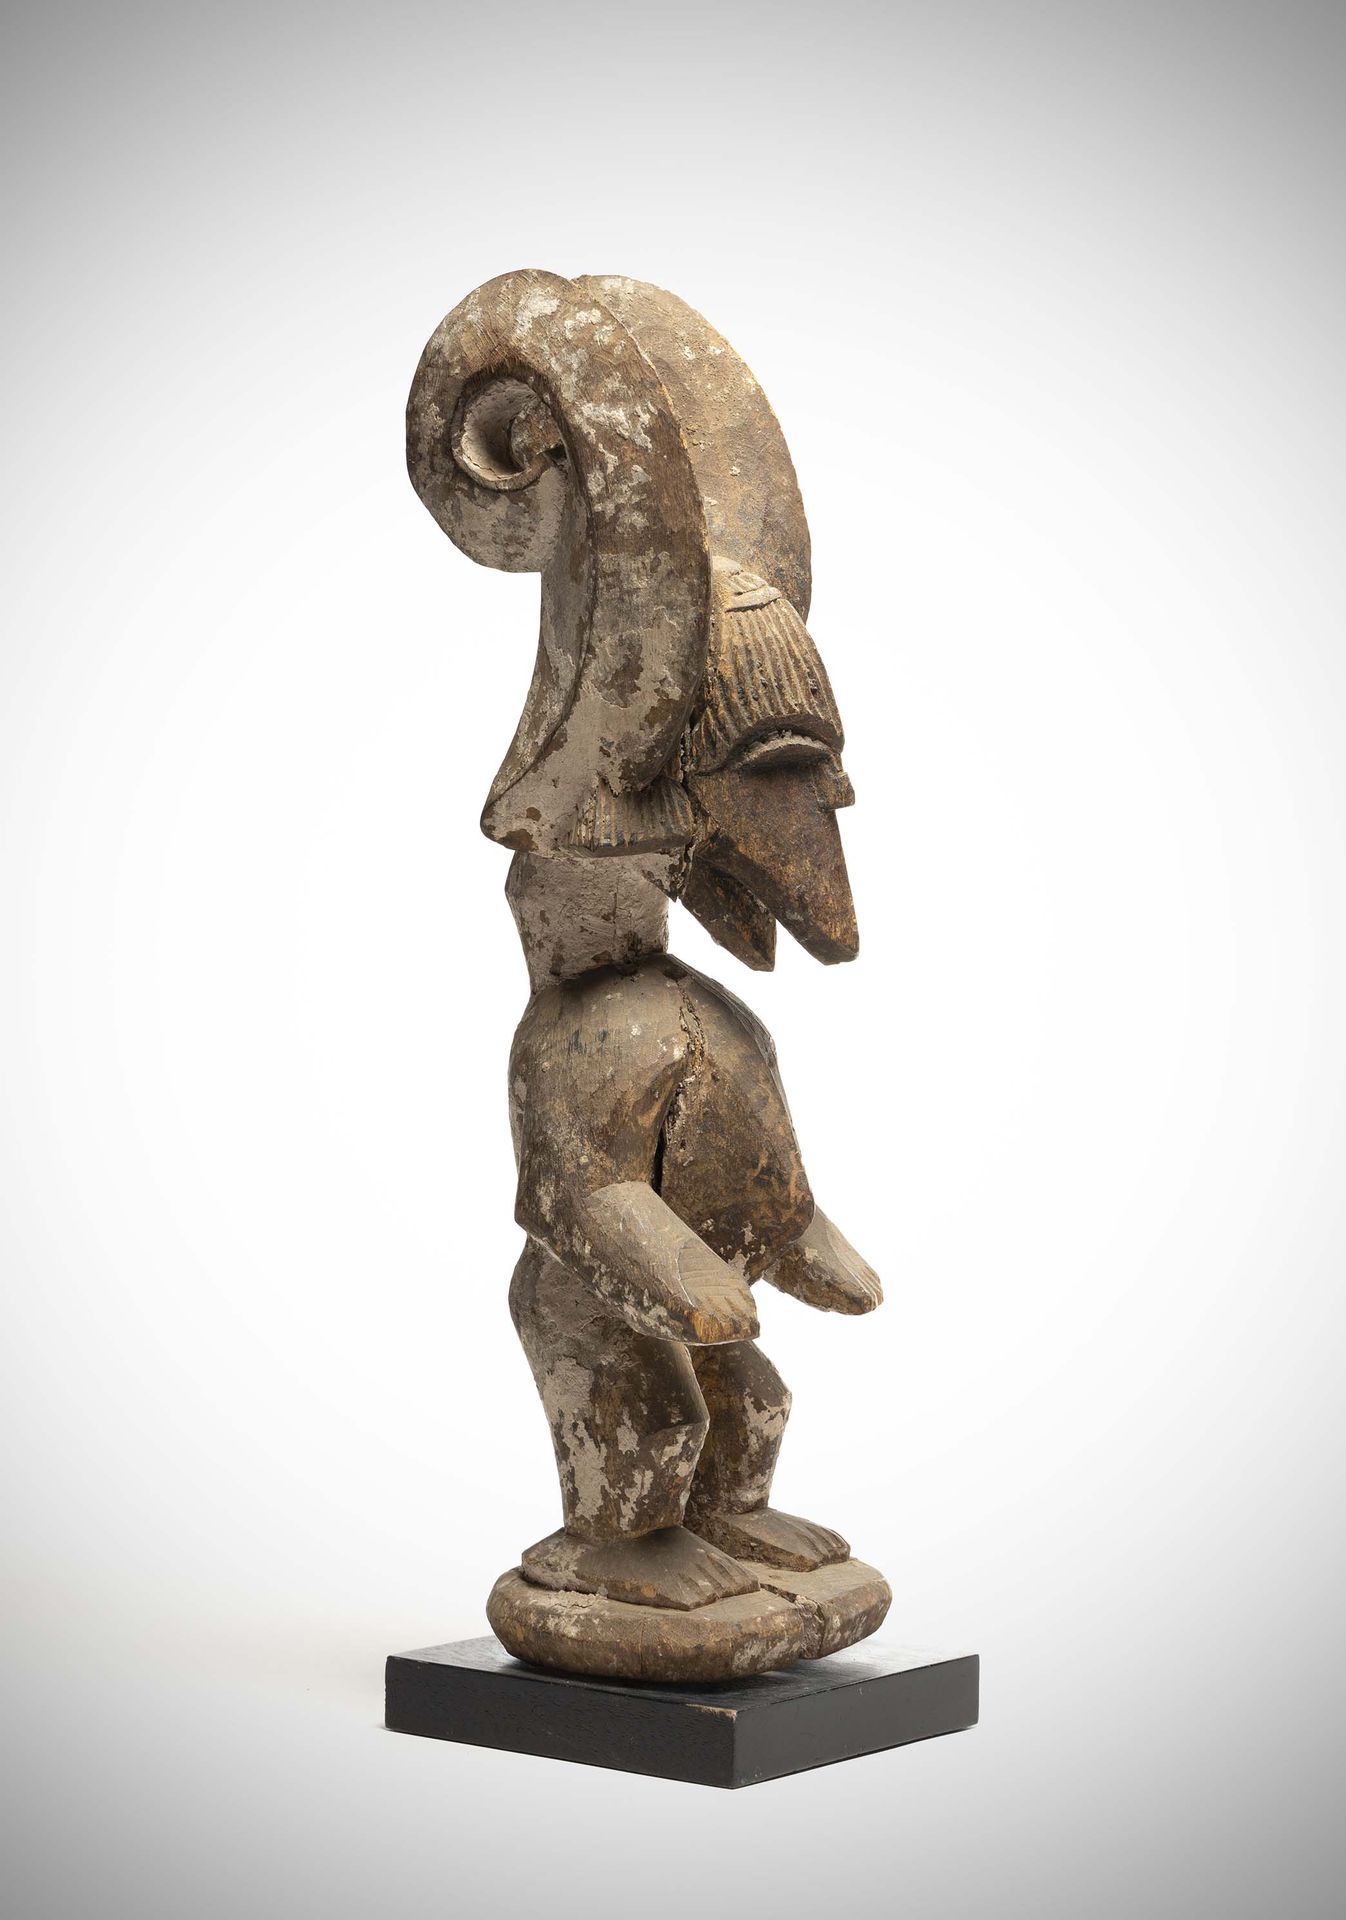 Null Ibo

(Nigeria) Estatua antropo-zoomorfa del culto "Ikenga" que representa a&hellip;